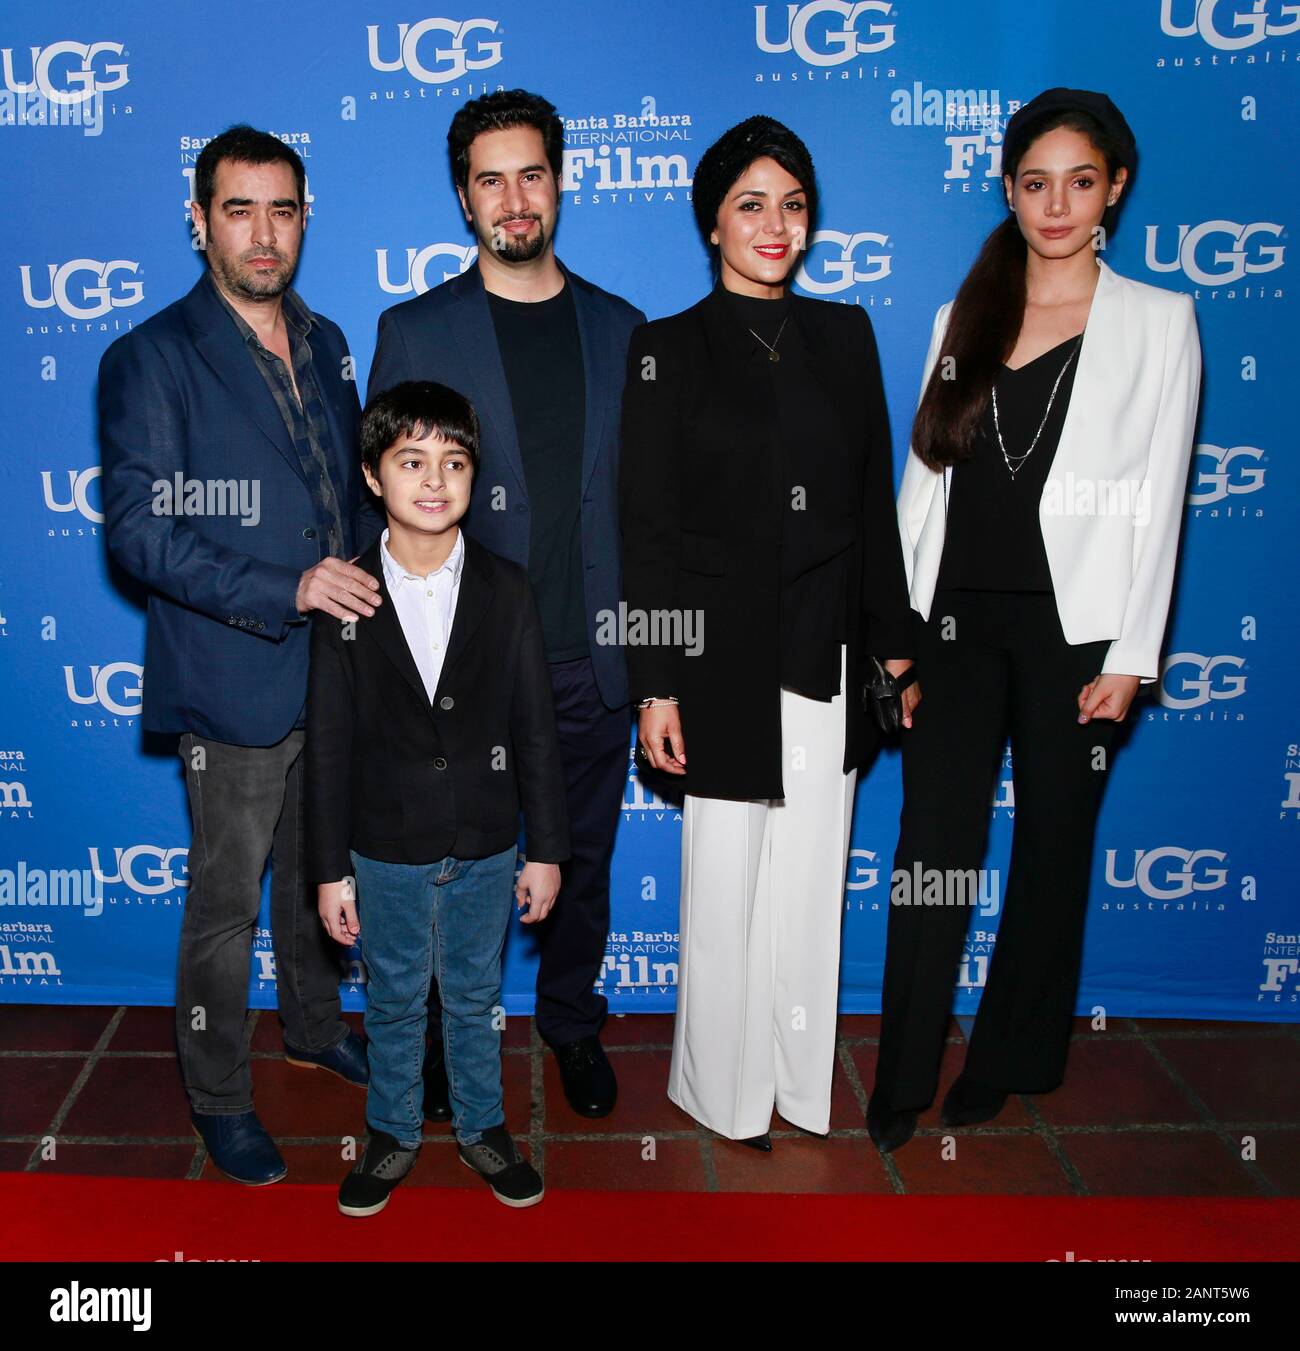 Santa Barbara, CA - Jan 18, 2020: Shahab Hosseini, Niousha Jafarian and Shahab Hosseini attend the 35th Annual Santa Barbara International Film Festiv Stock Photo